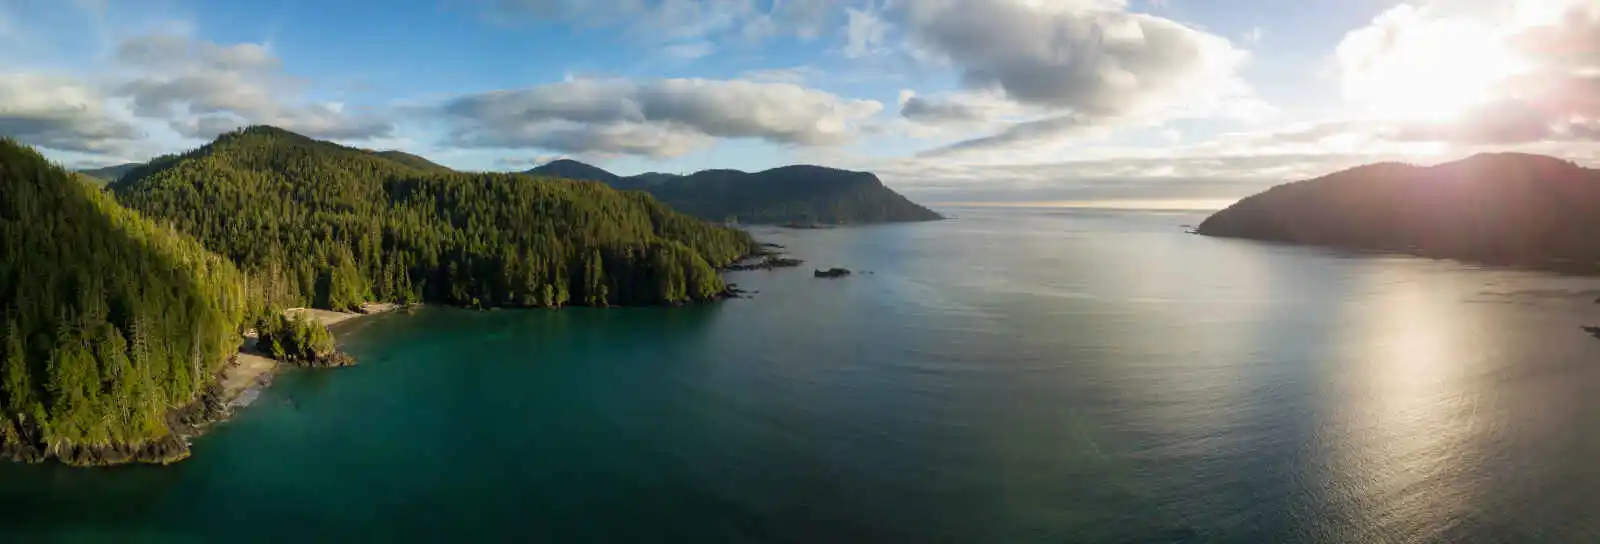 Cape Scott au nord de Vancouver Island, BC, Canada